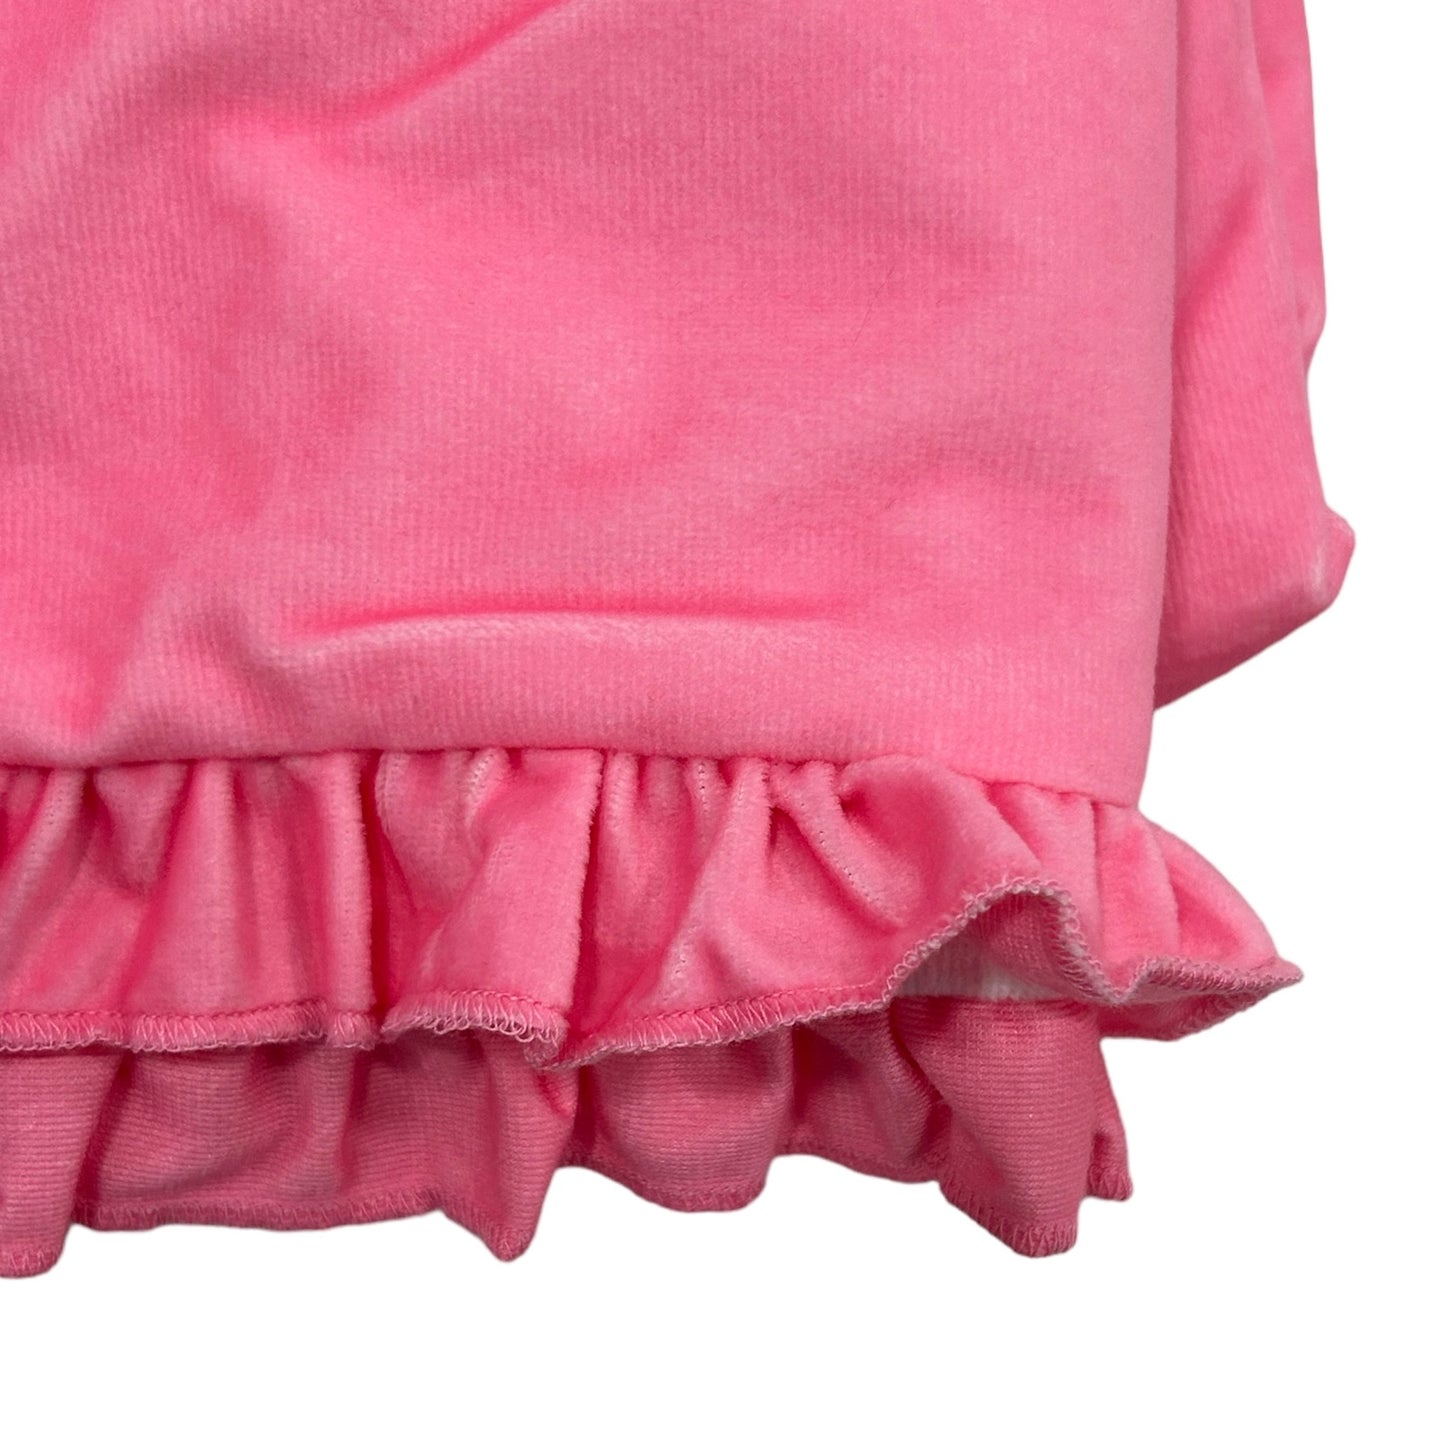 Swim Towel - Pink Gingham